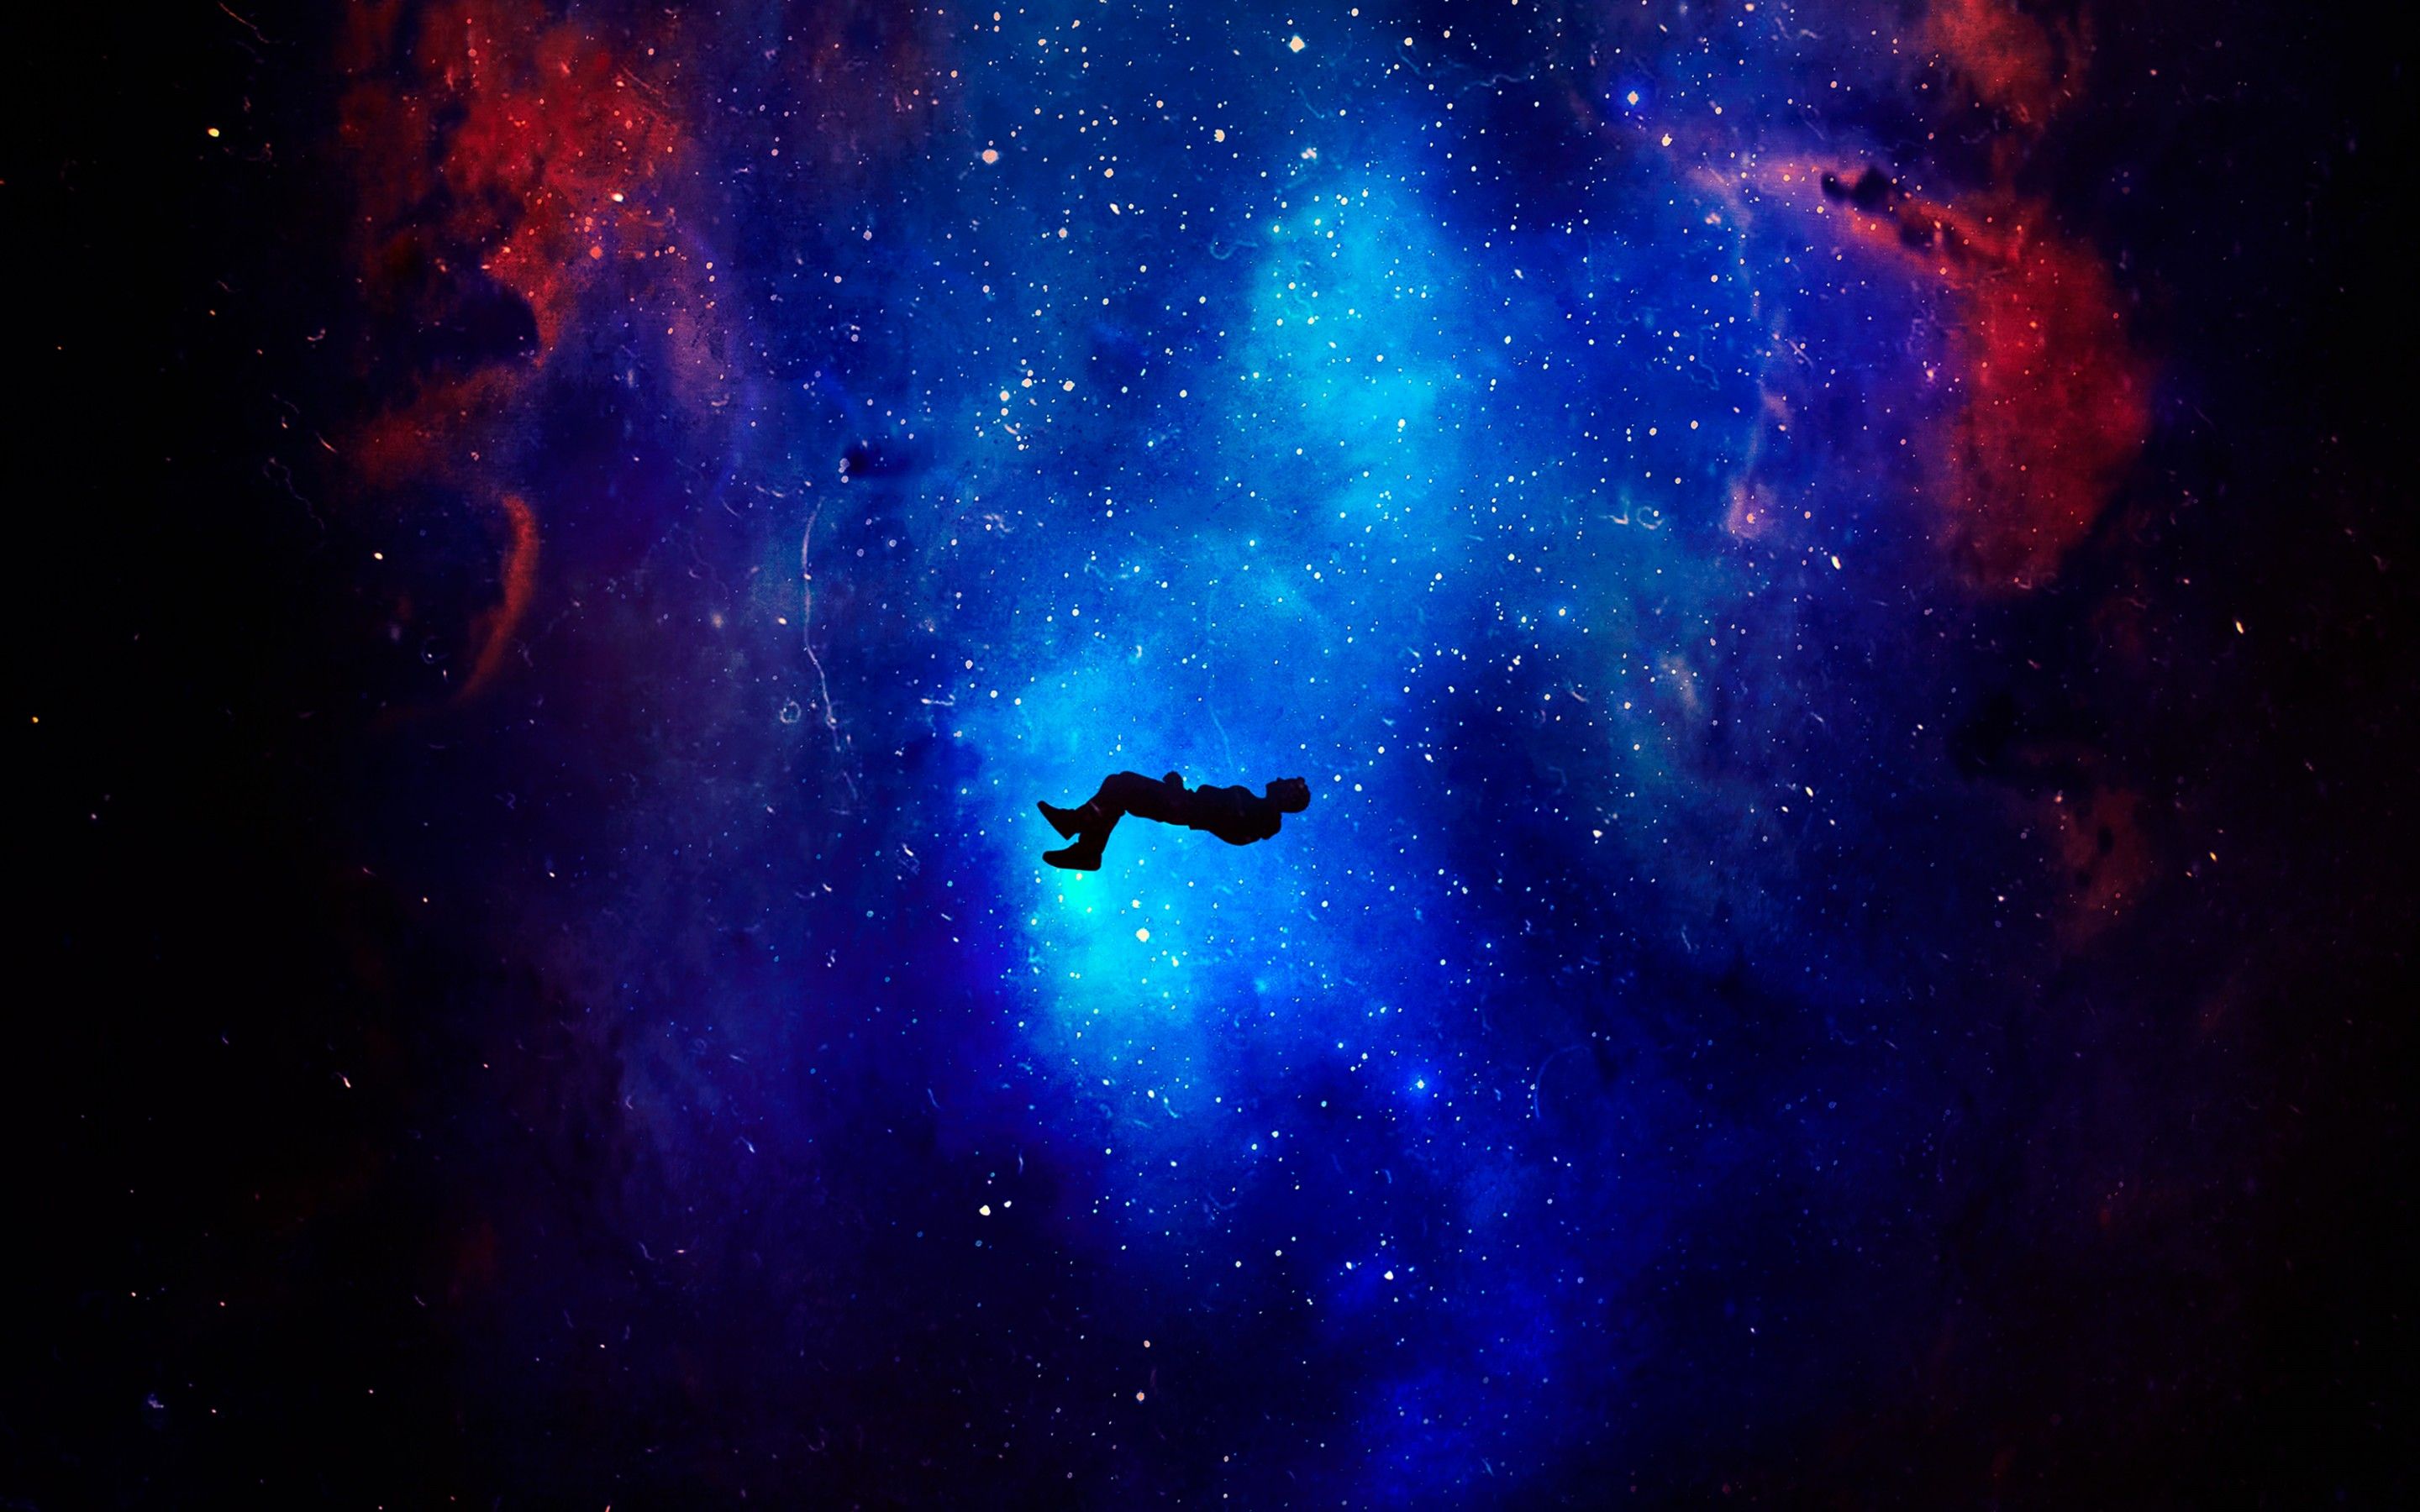 Lost in Space Wallpaper 4K, Alone, Dream, Deep space, Nebula, Fantasy